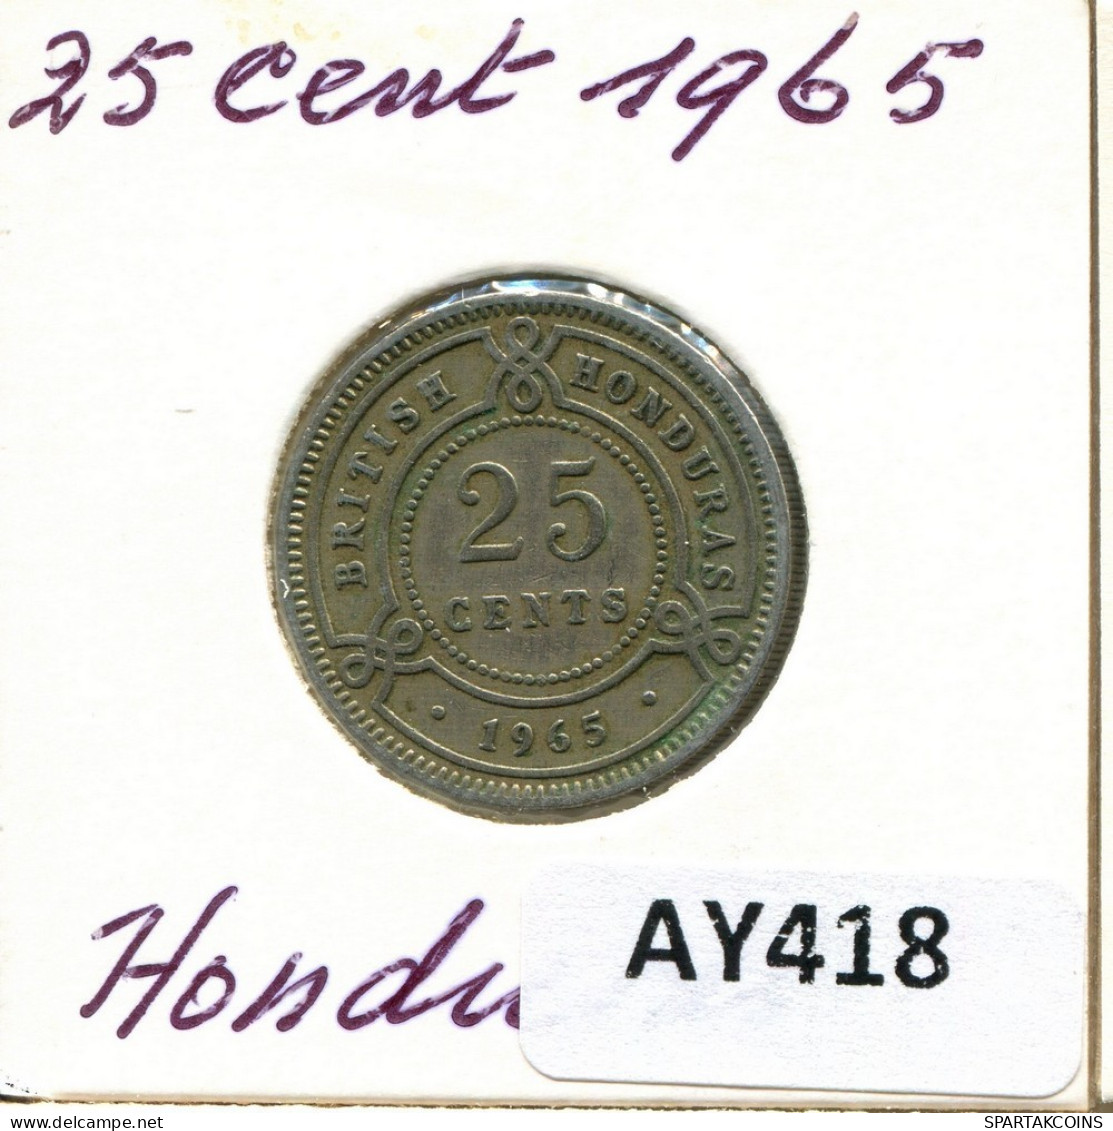 25 CENTS 1965 HONDURAS Moneda #AY418.E.A - Honduras